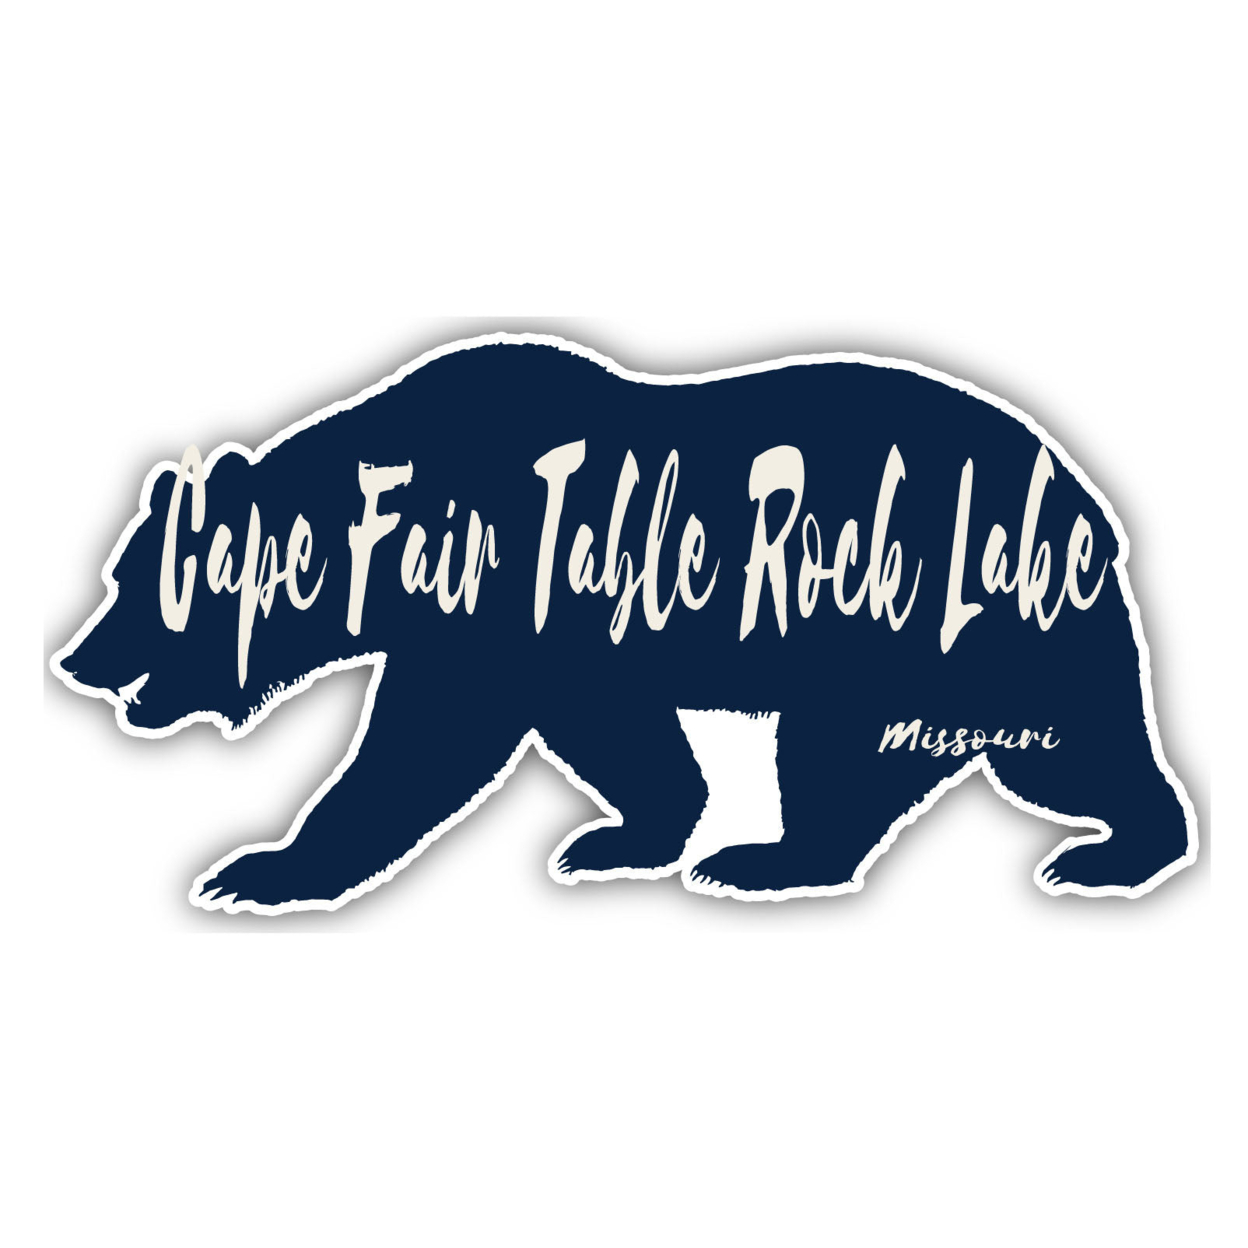 Cape Fair Table Rock Lake Missouri Souvenir Decorative Stickers (Choose Theme And Size) - 4-Pack, 6-Inch, Bear